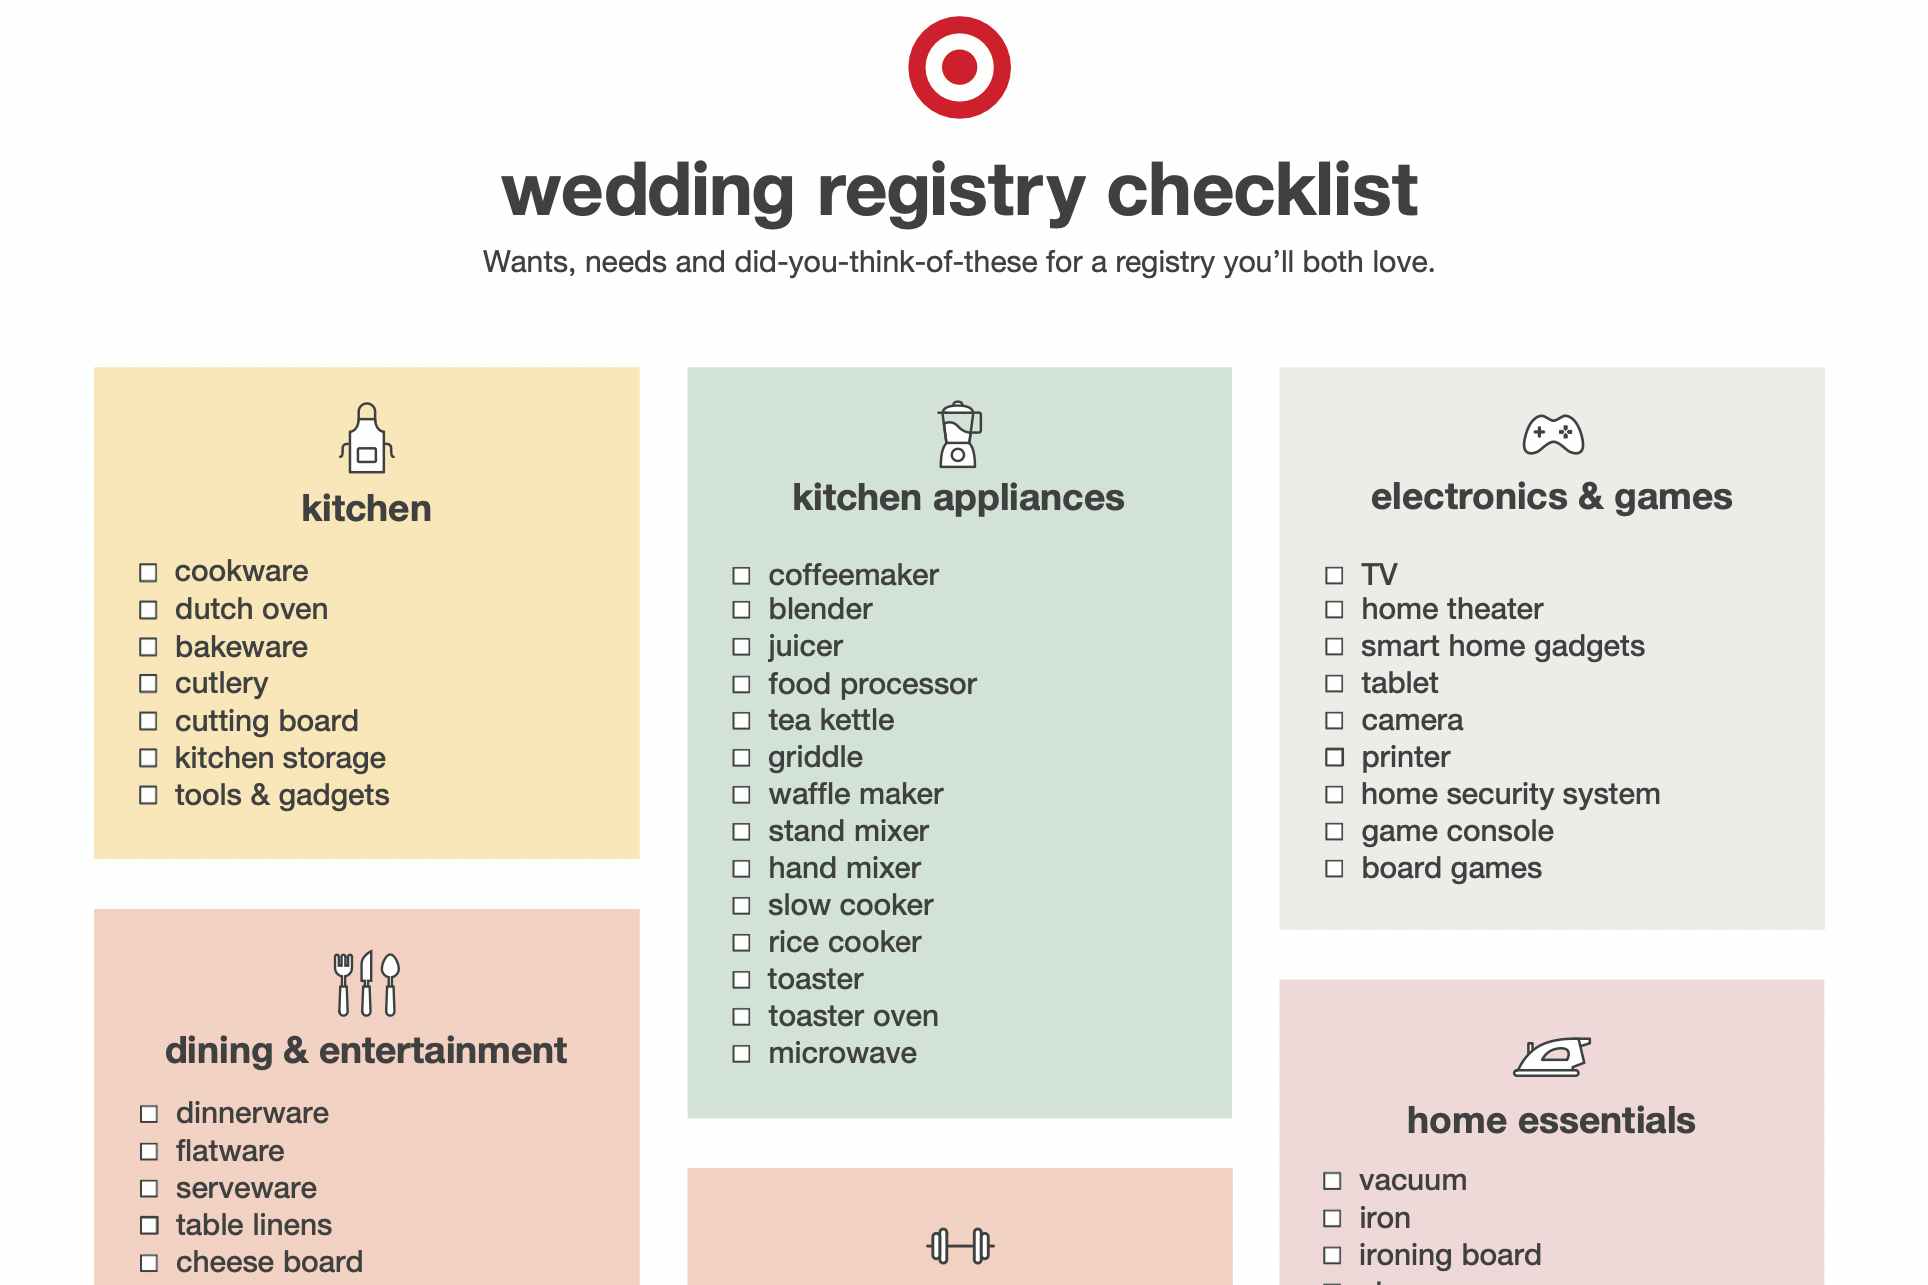 https://prod-cdn-thekrazycouponlady.imgix.net/wp-content/uploads/2021/04/target-wedding-registry-checklist-screenshot-2022-1655649523-1655649523.png?auto=format&fit=fill&q=25